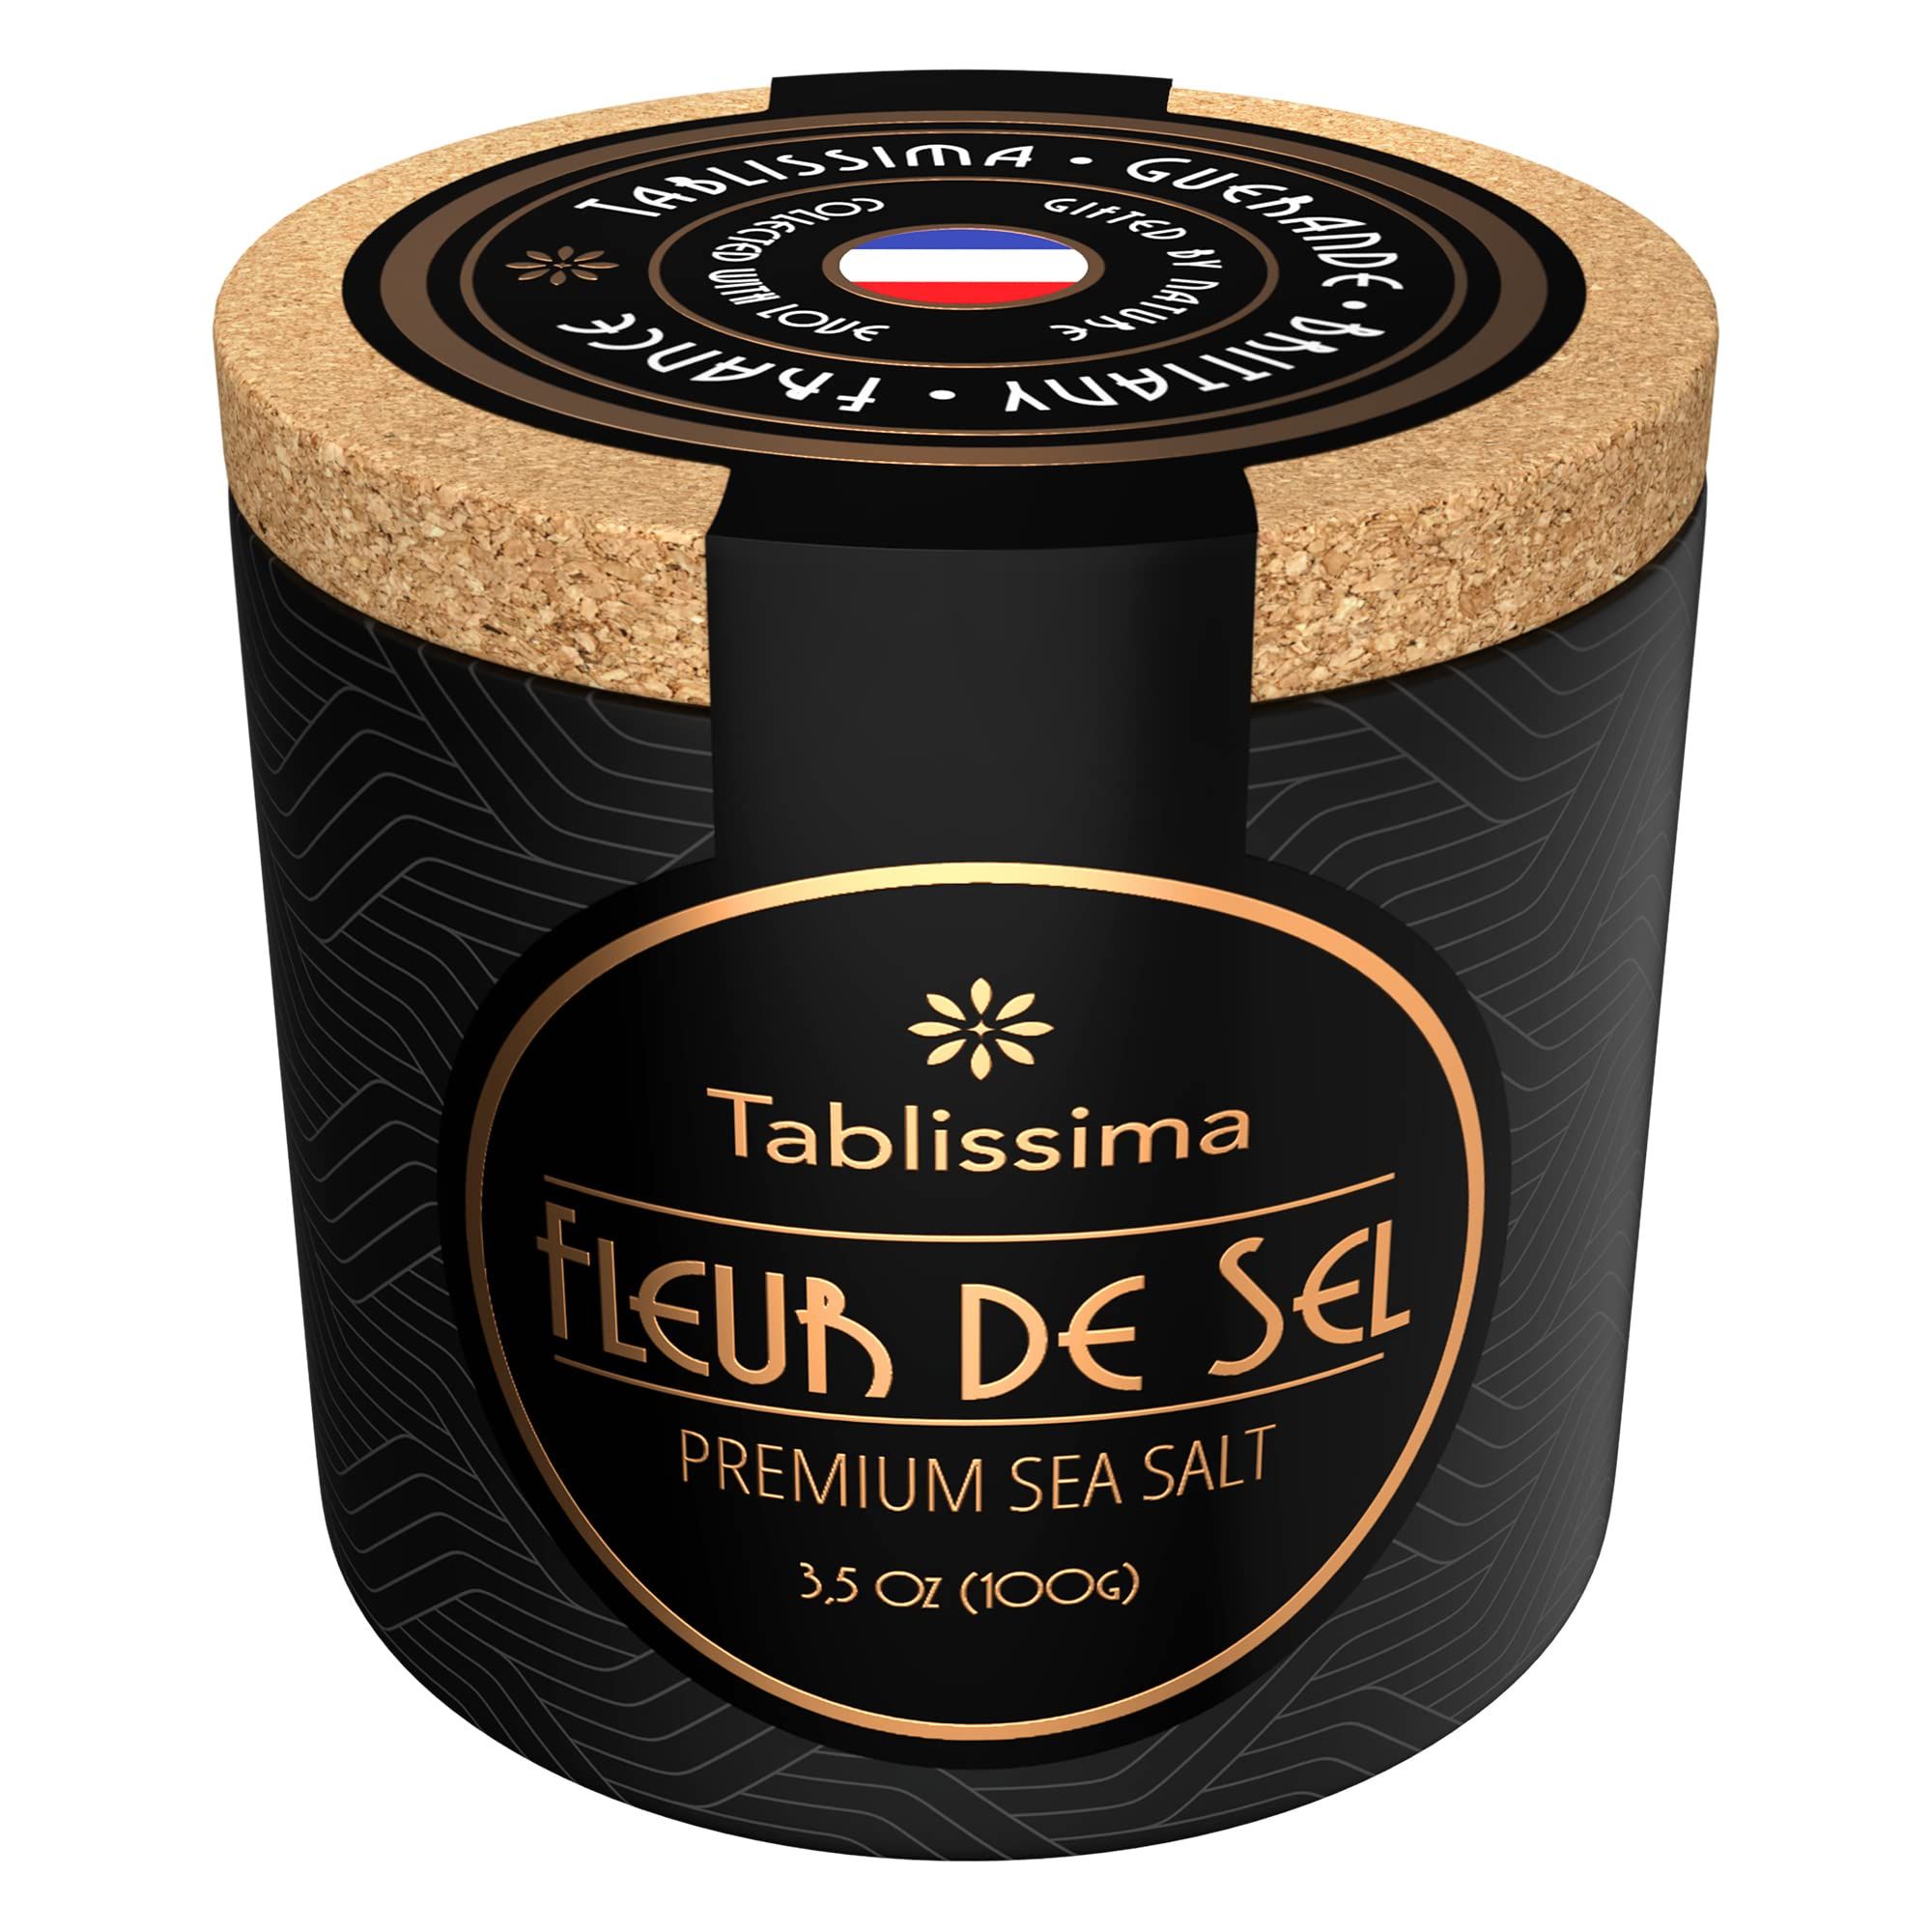 Fleur de Sel - Premium Sea salt from Guerande France - Flaky Sea Salt from the Celtic Sea - Salt ... | Amazon (US)